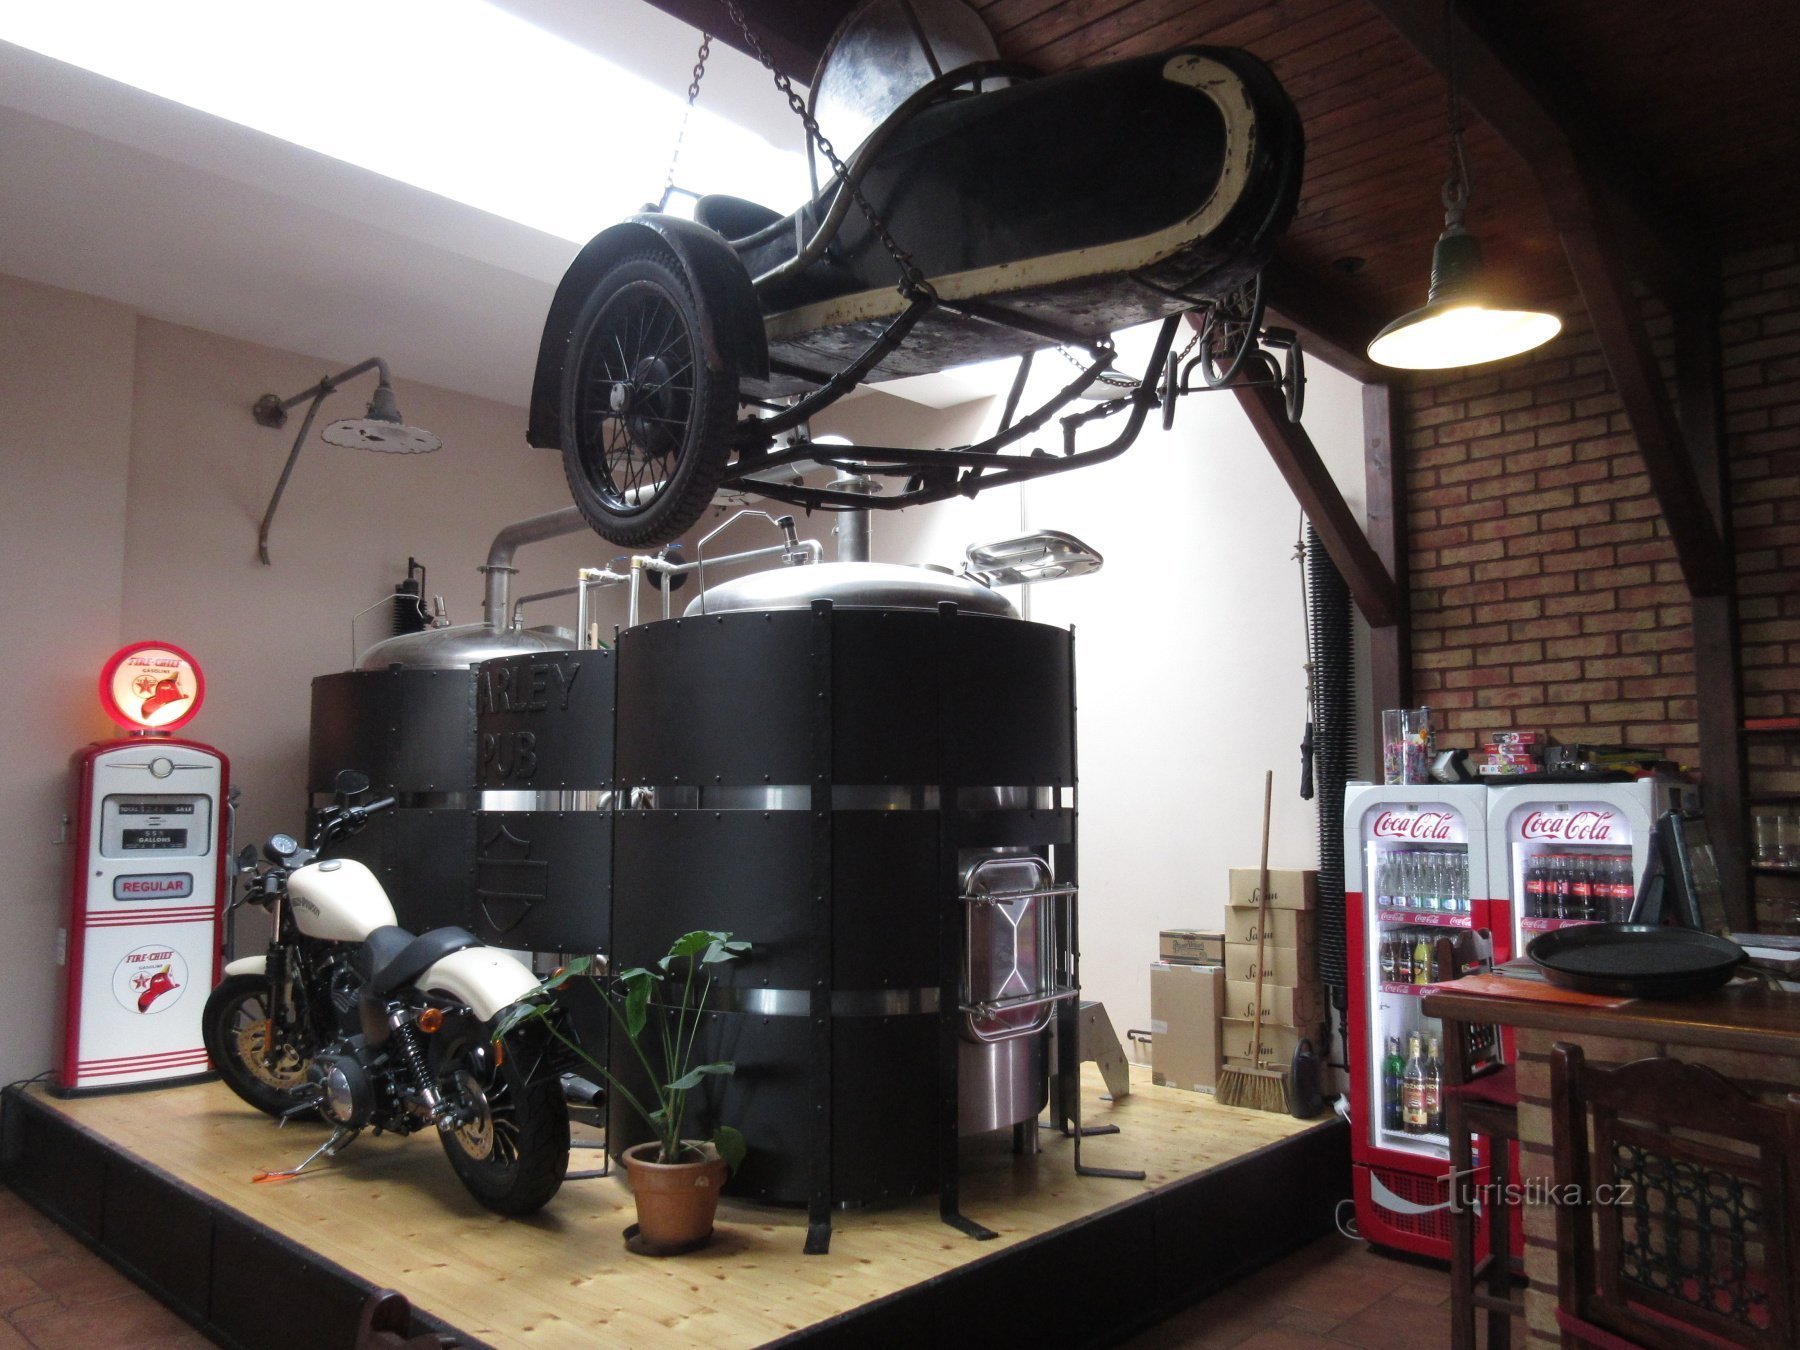 Otrokovice - museum en microbrouwerij Harley Pub